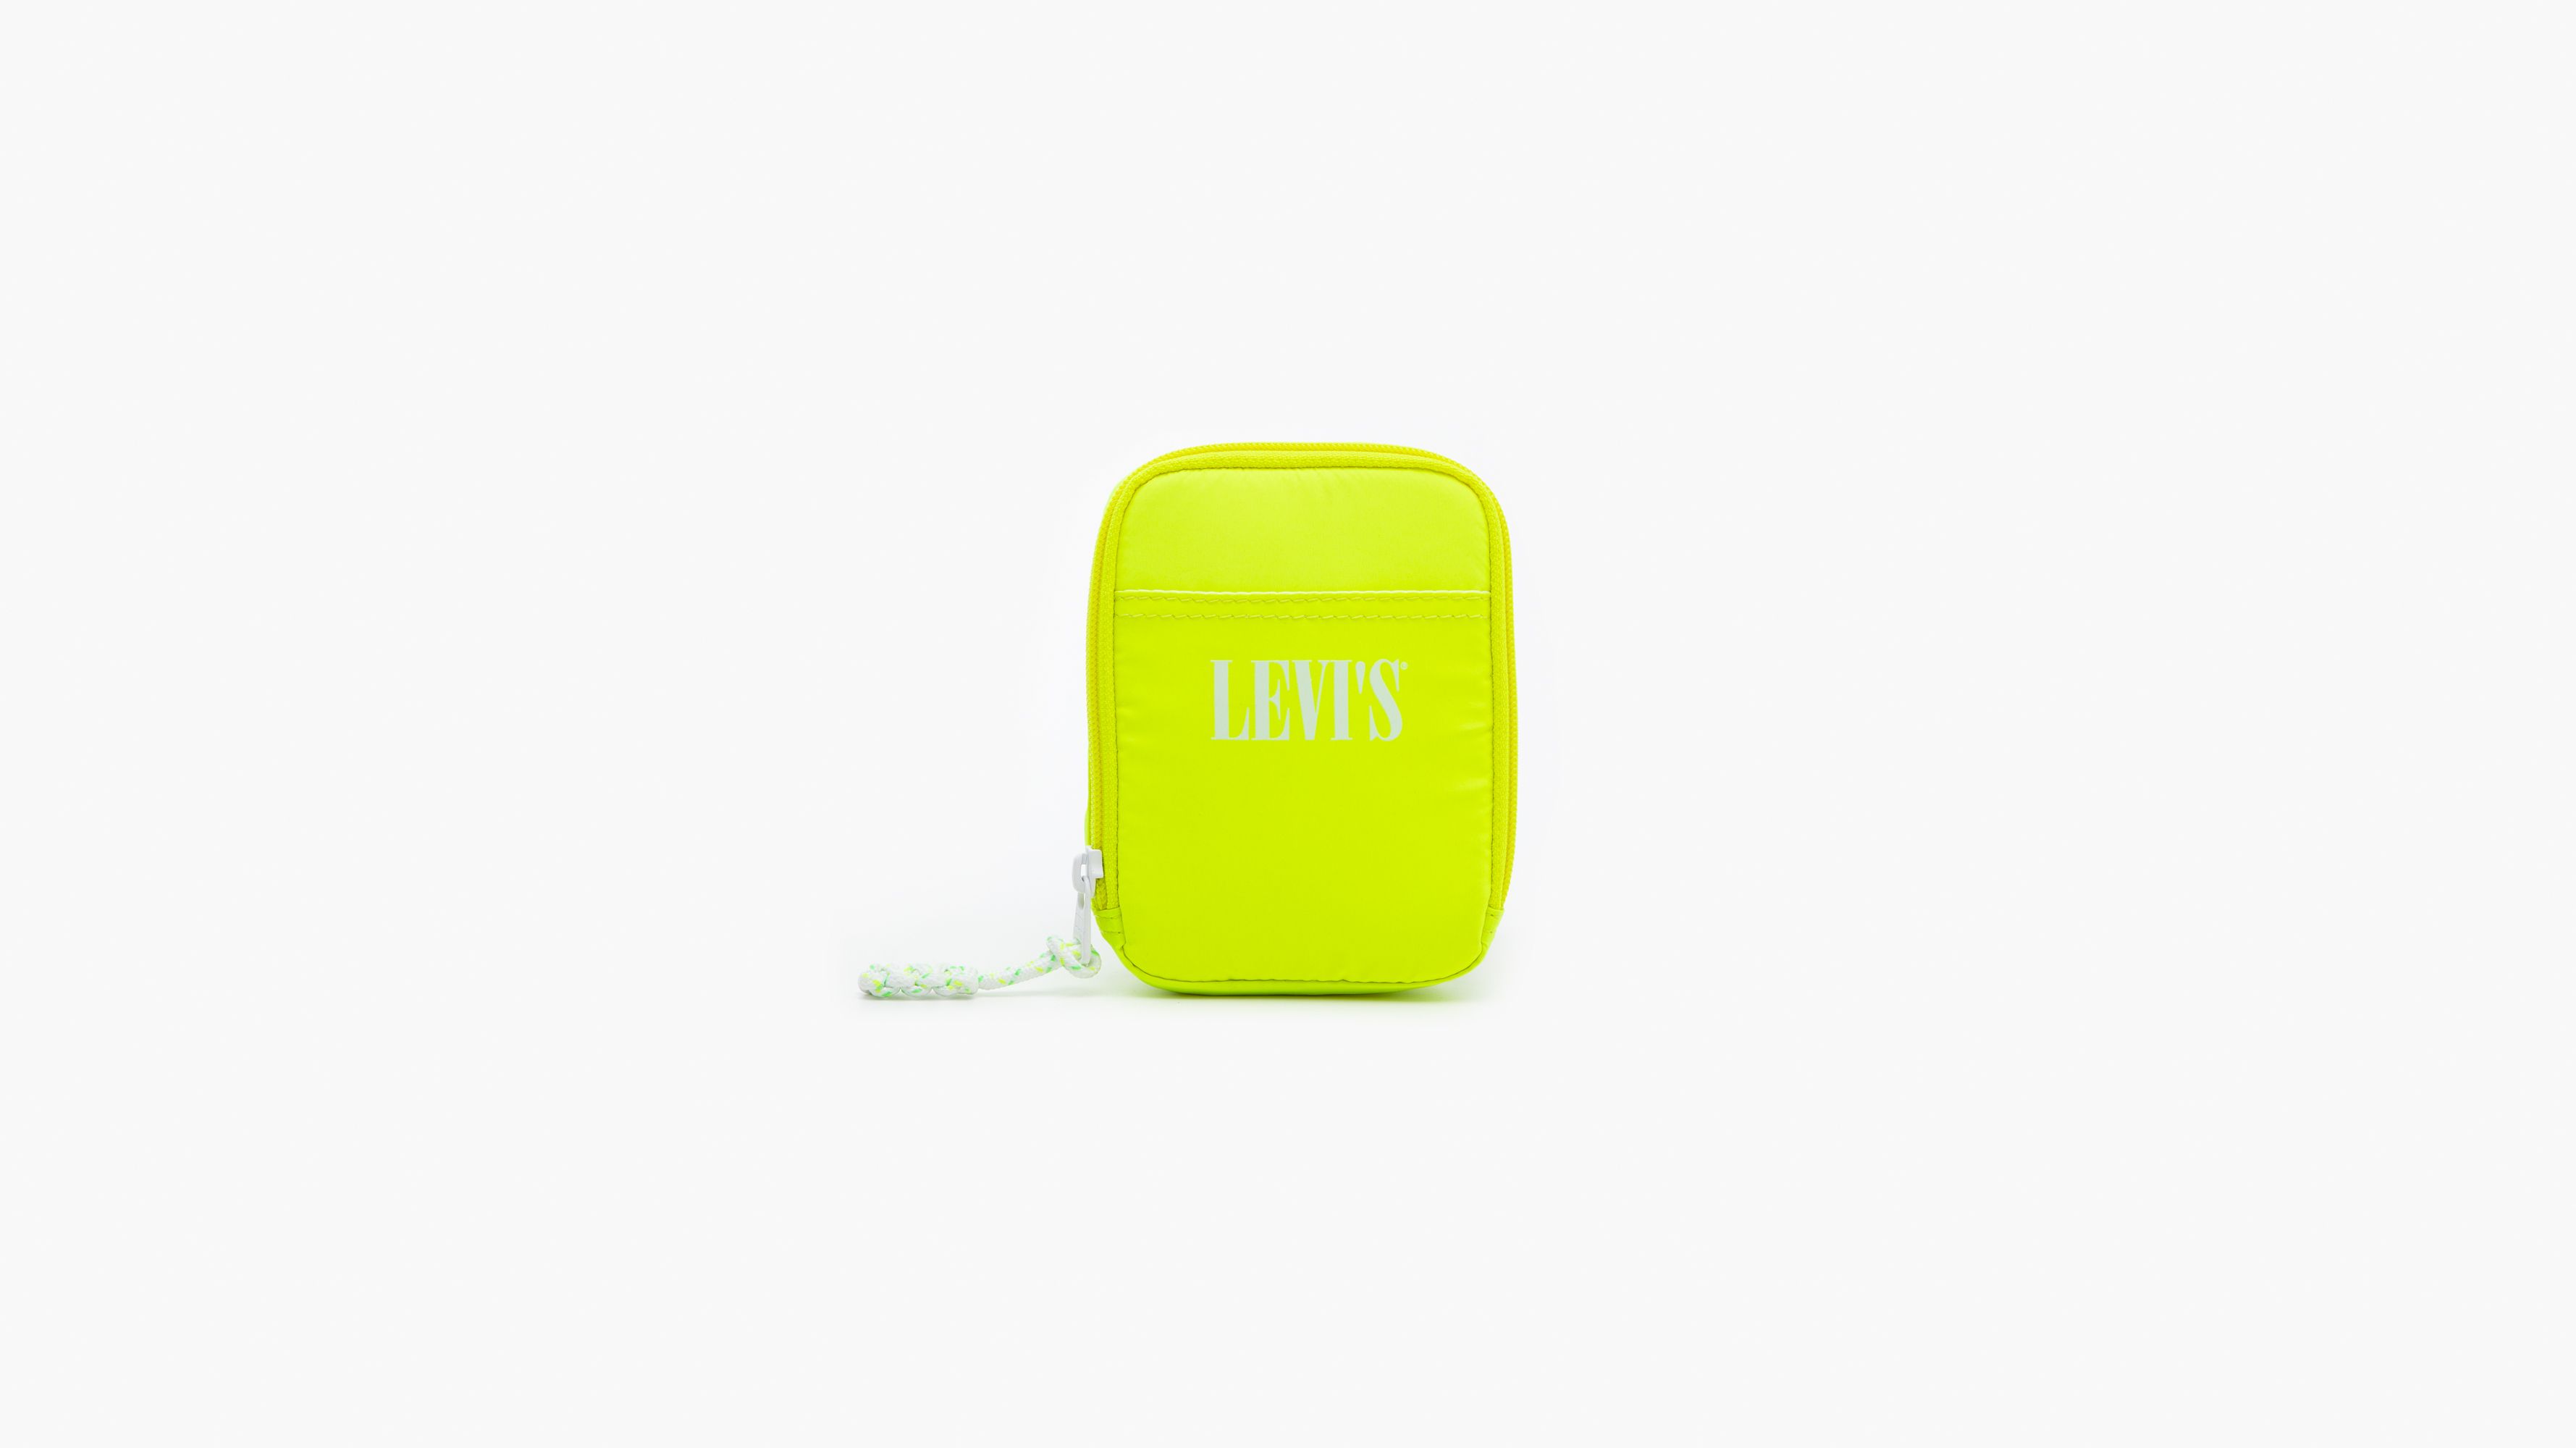 levis small bag